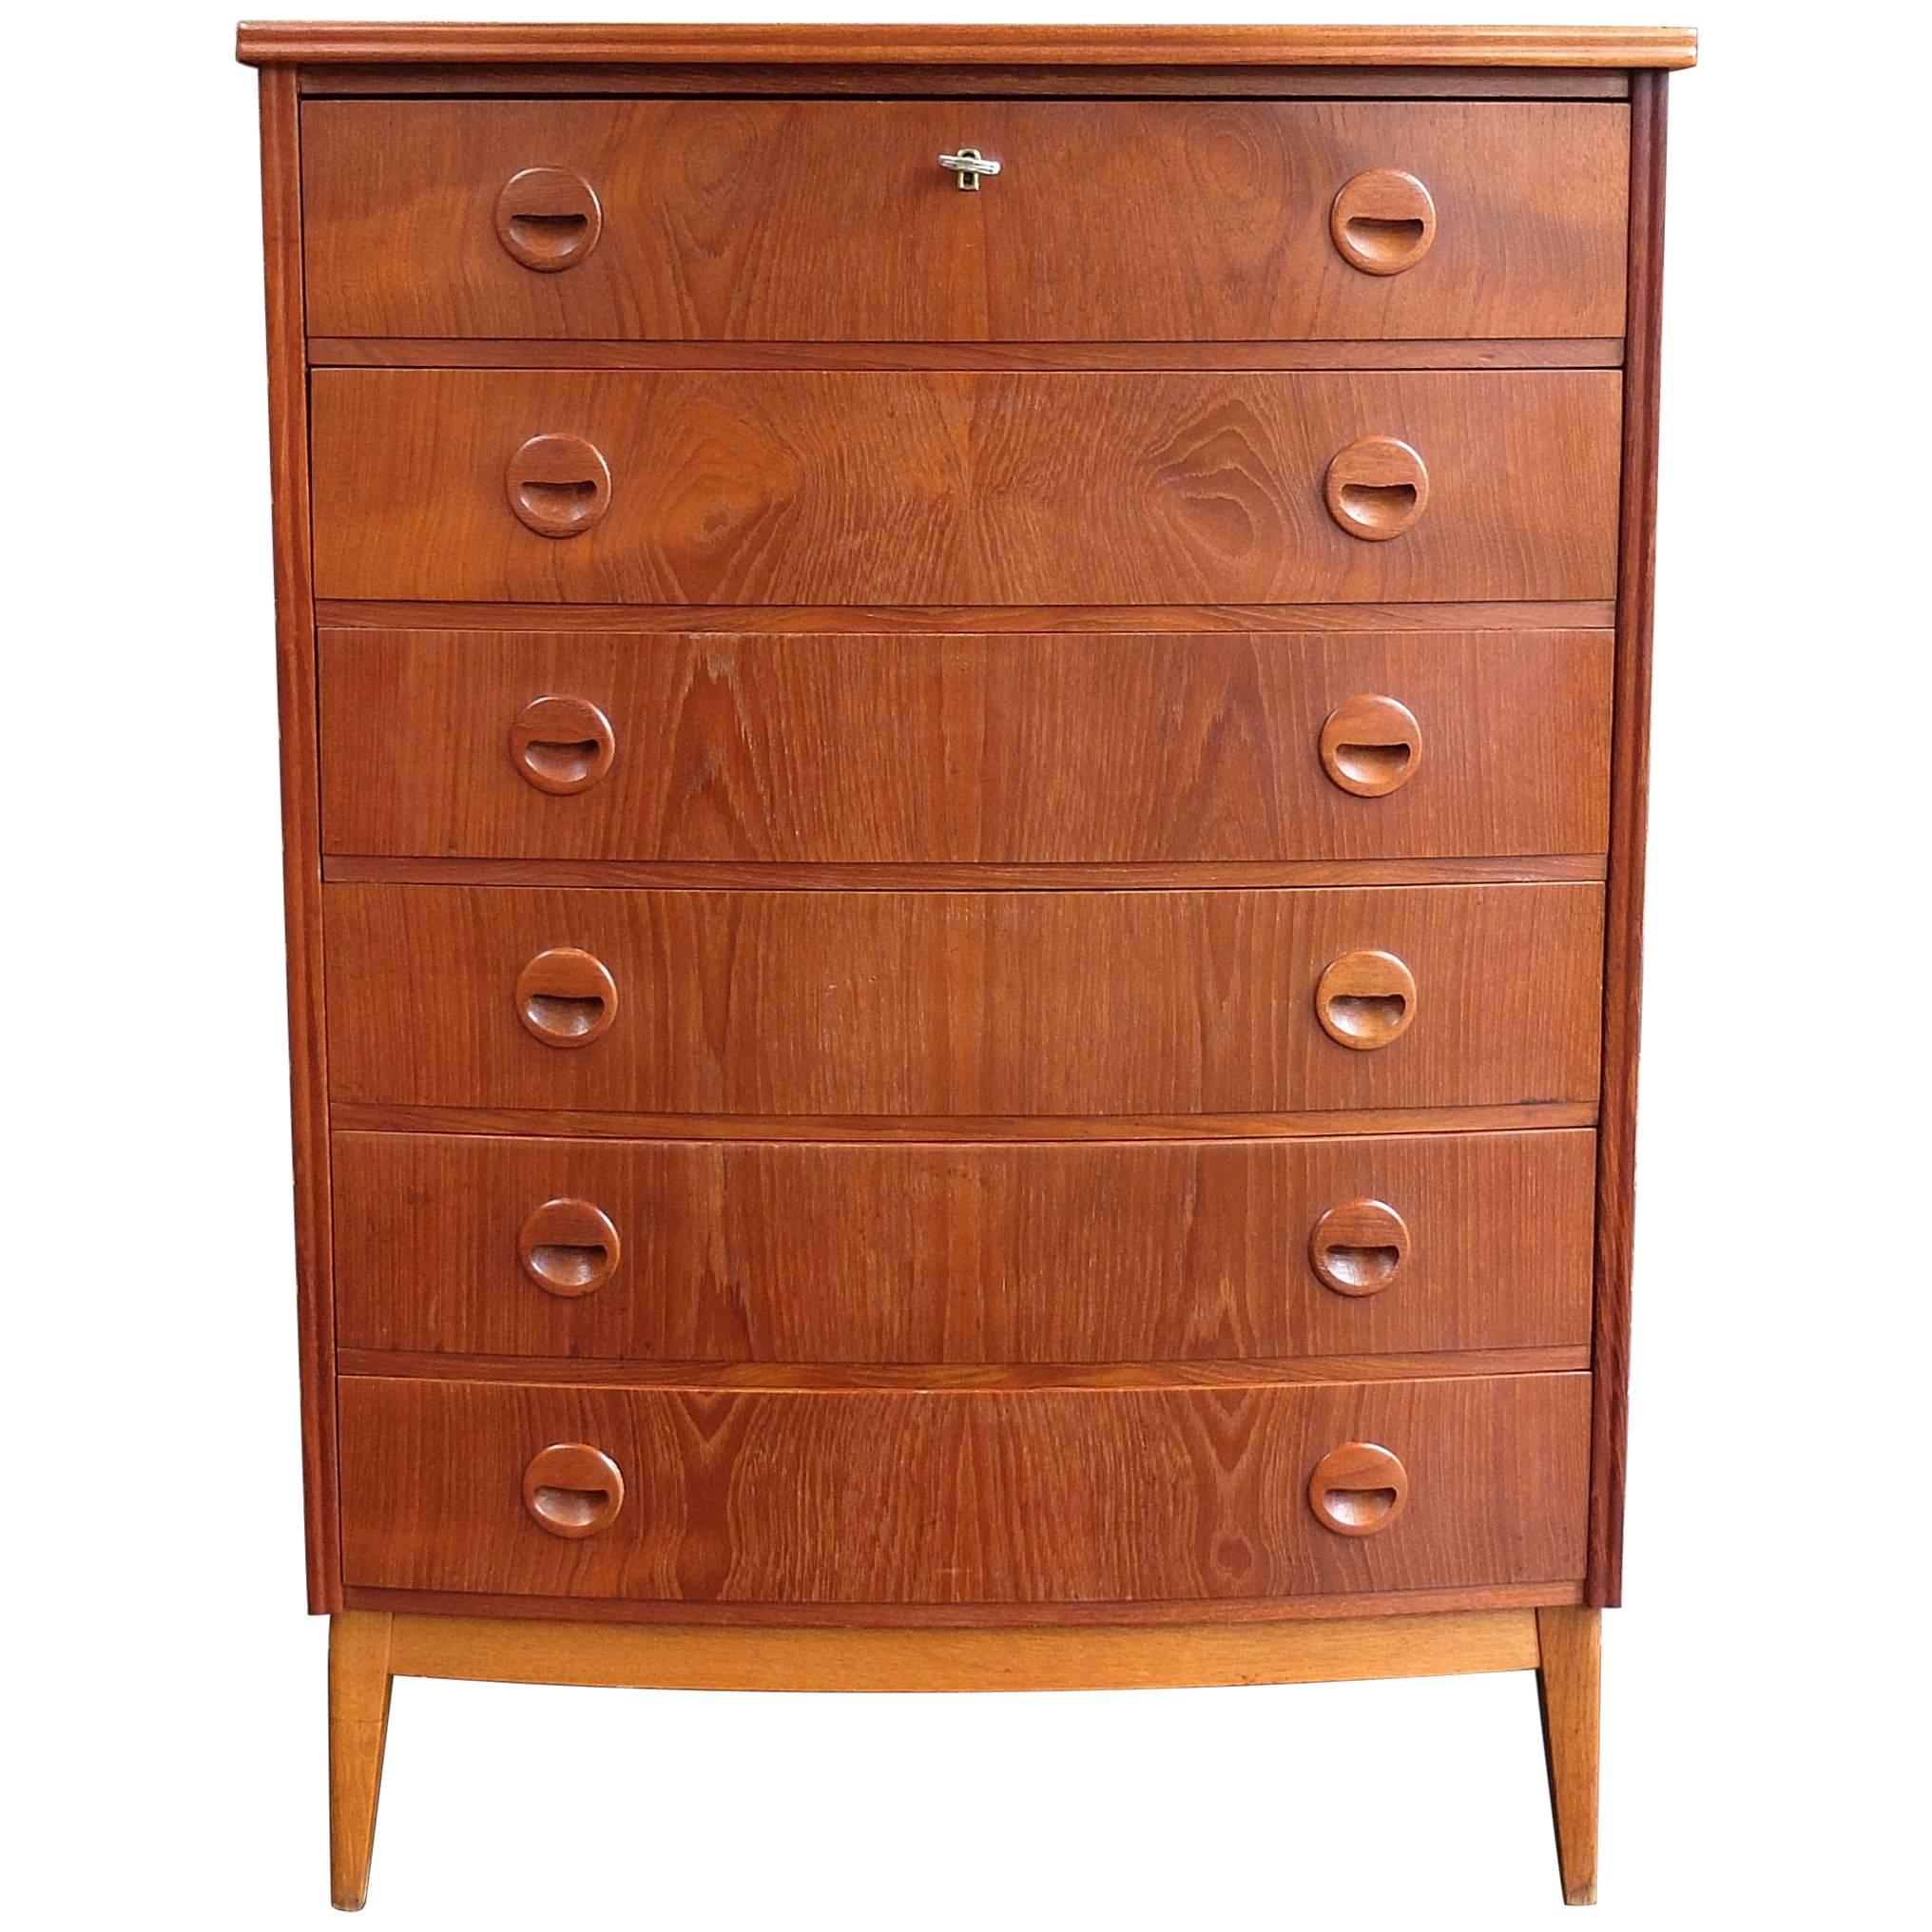 Kai Kristiansen Teak and Oak Bow fronted Dresser Chest of Drawers 1960's Danish For Sale